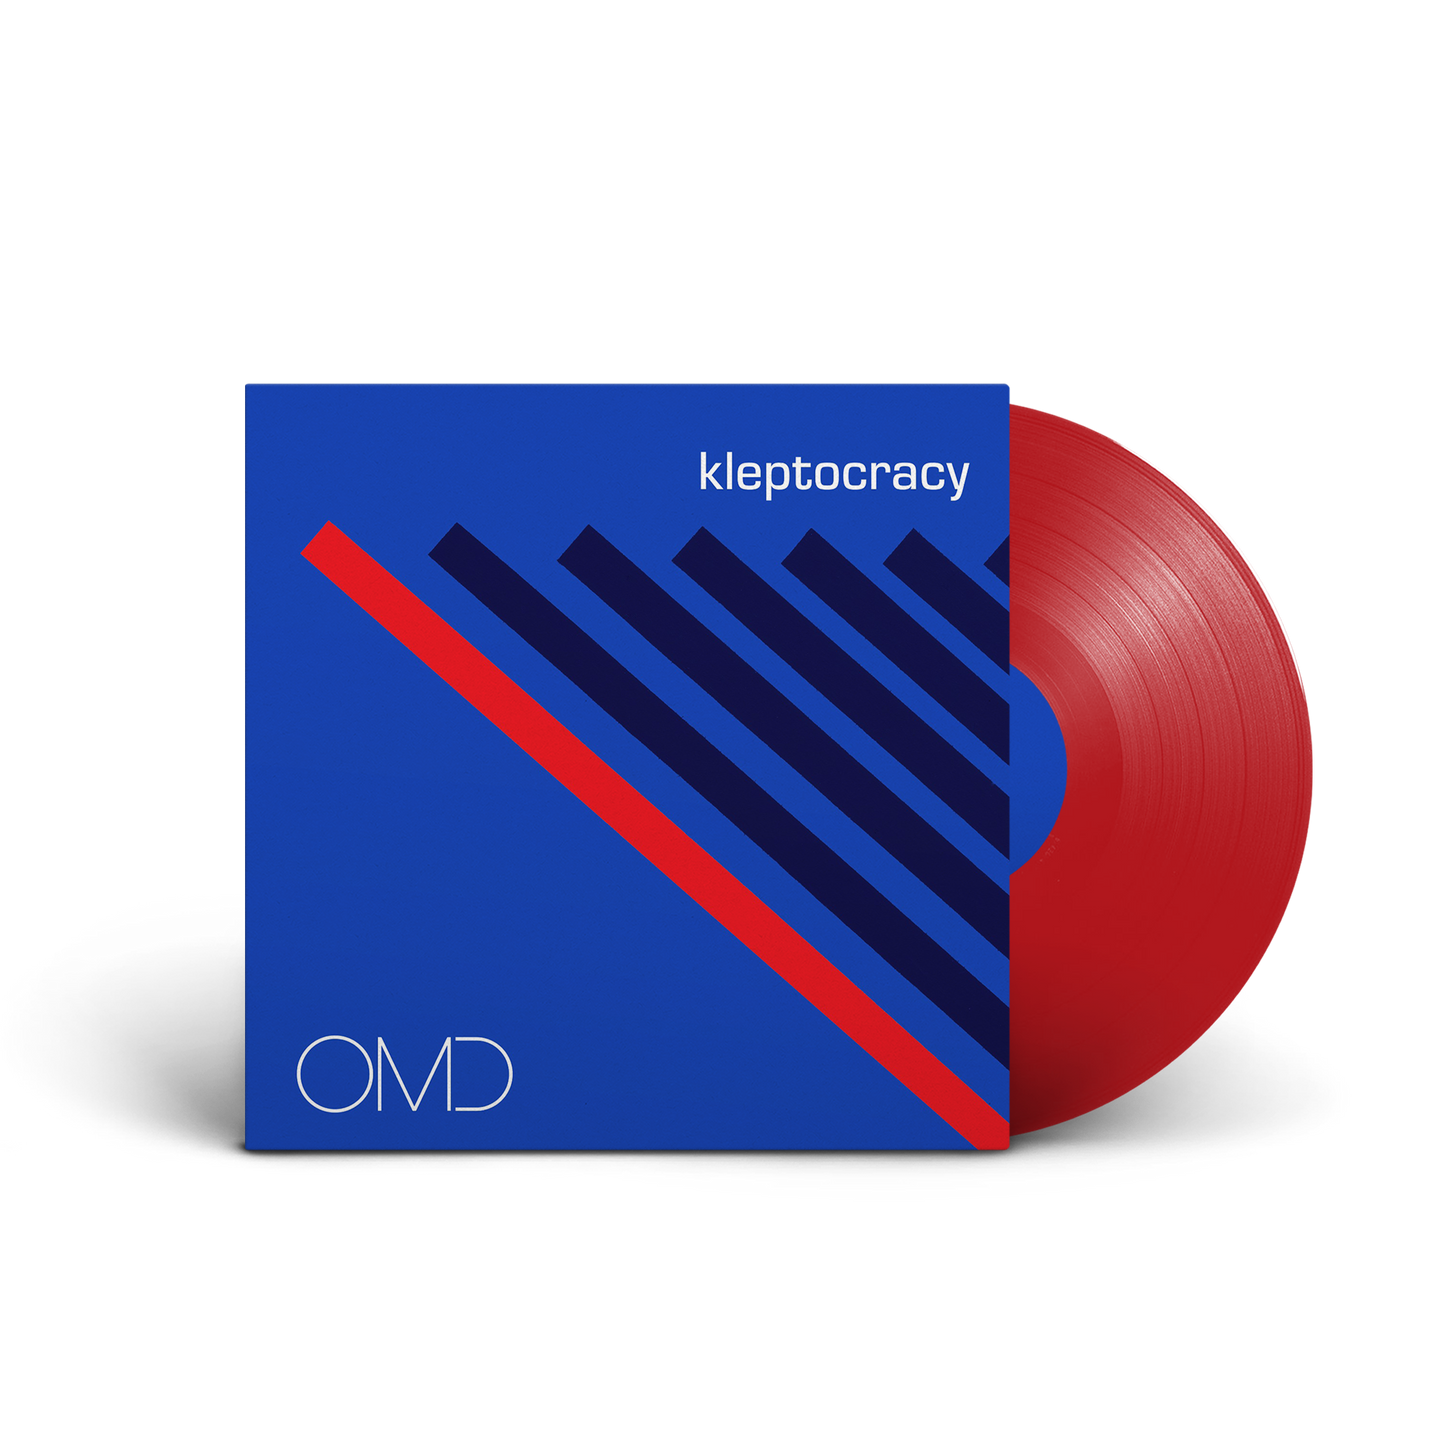 kleptocracy 12" vinyl single